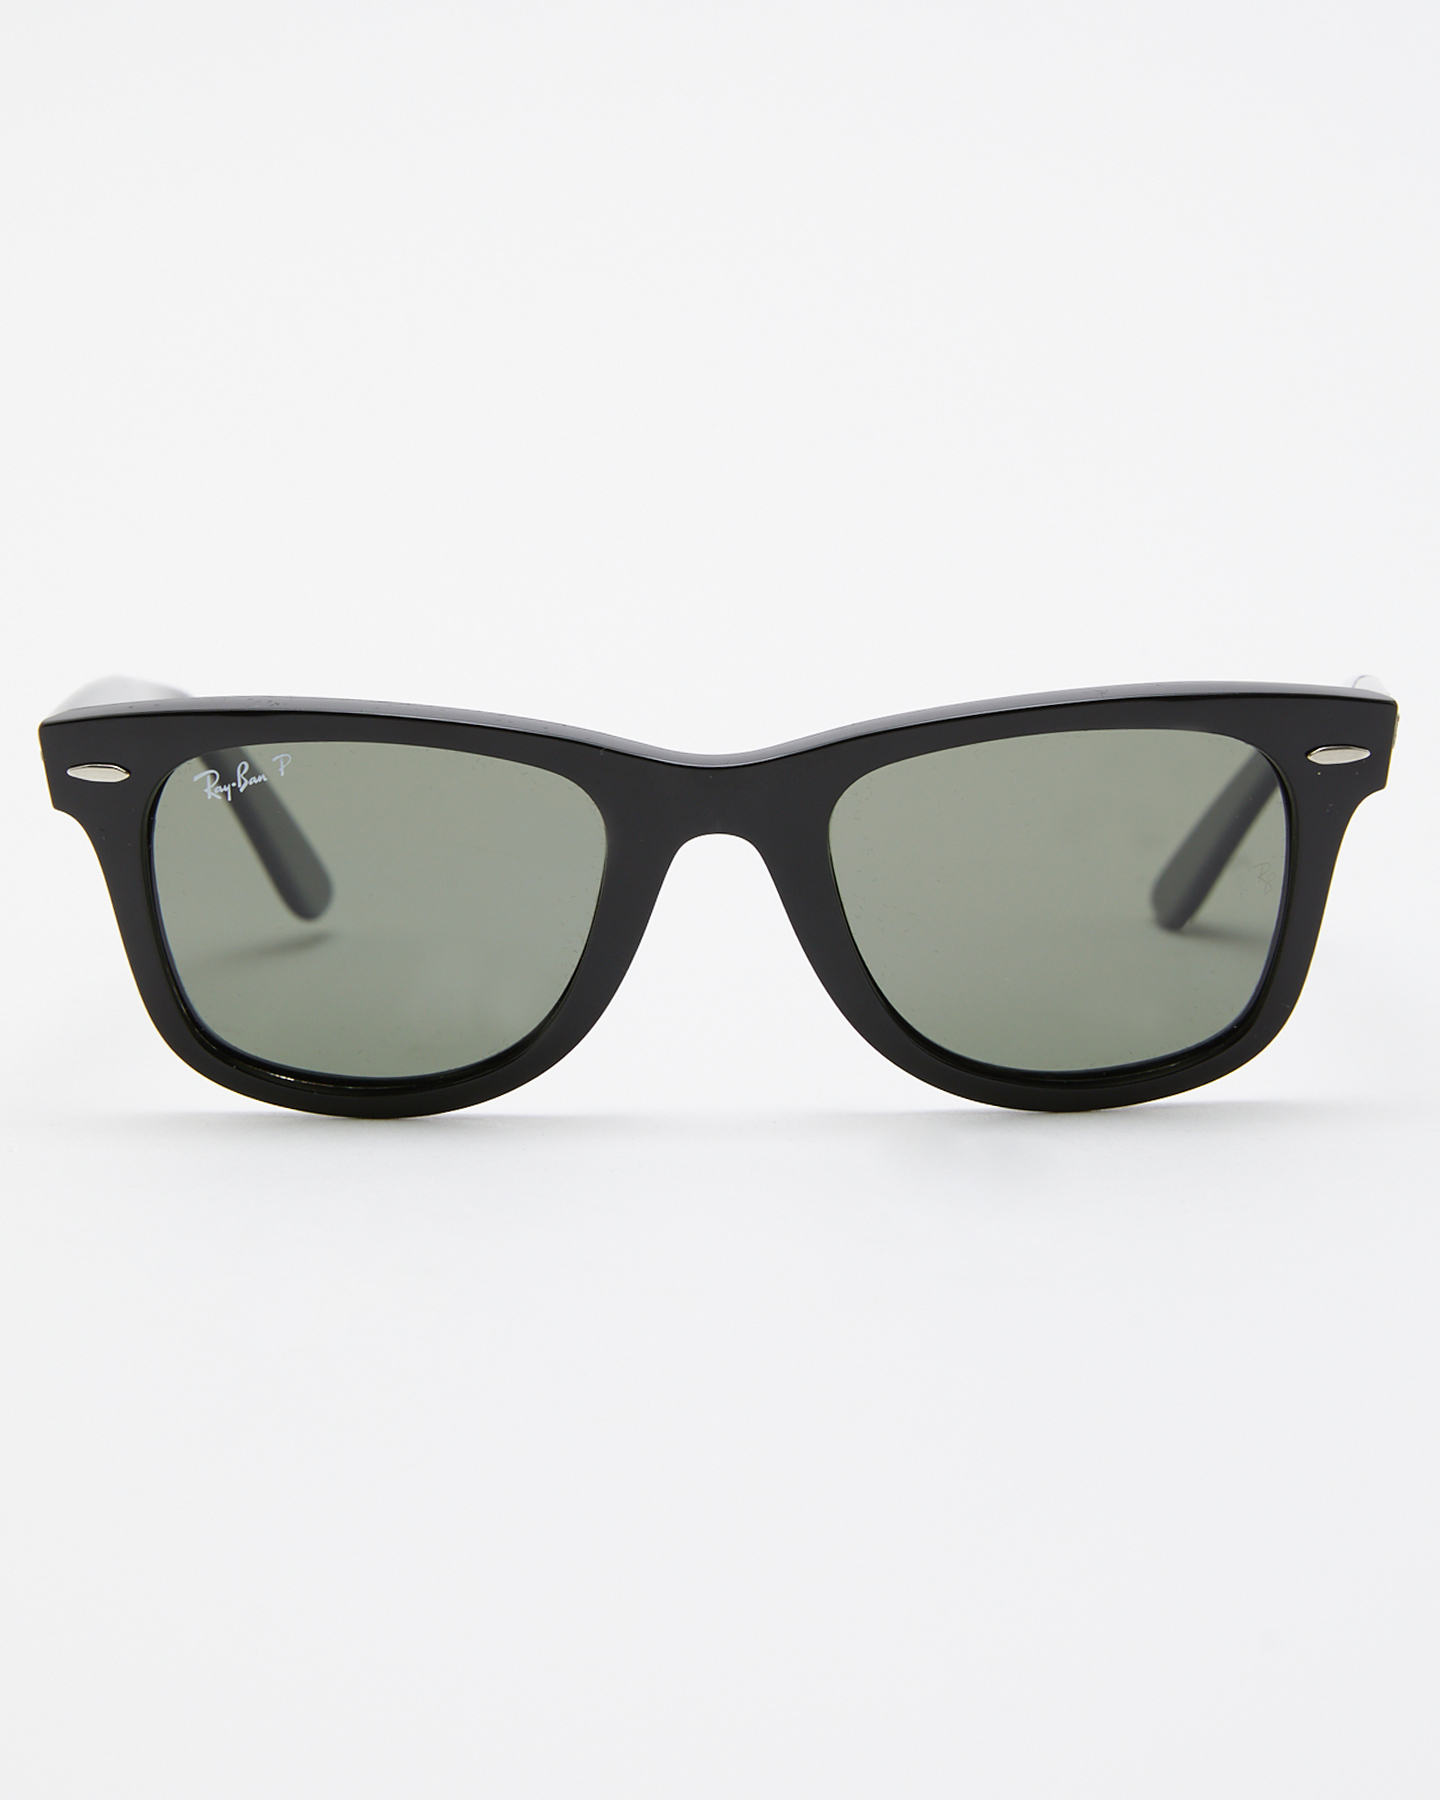 Ray-Ban Wayfarer 50 Sunglasses - Black Polarized | SurfStitch